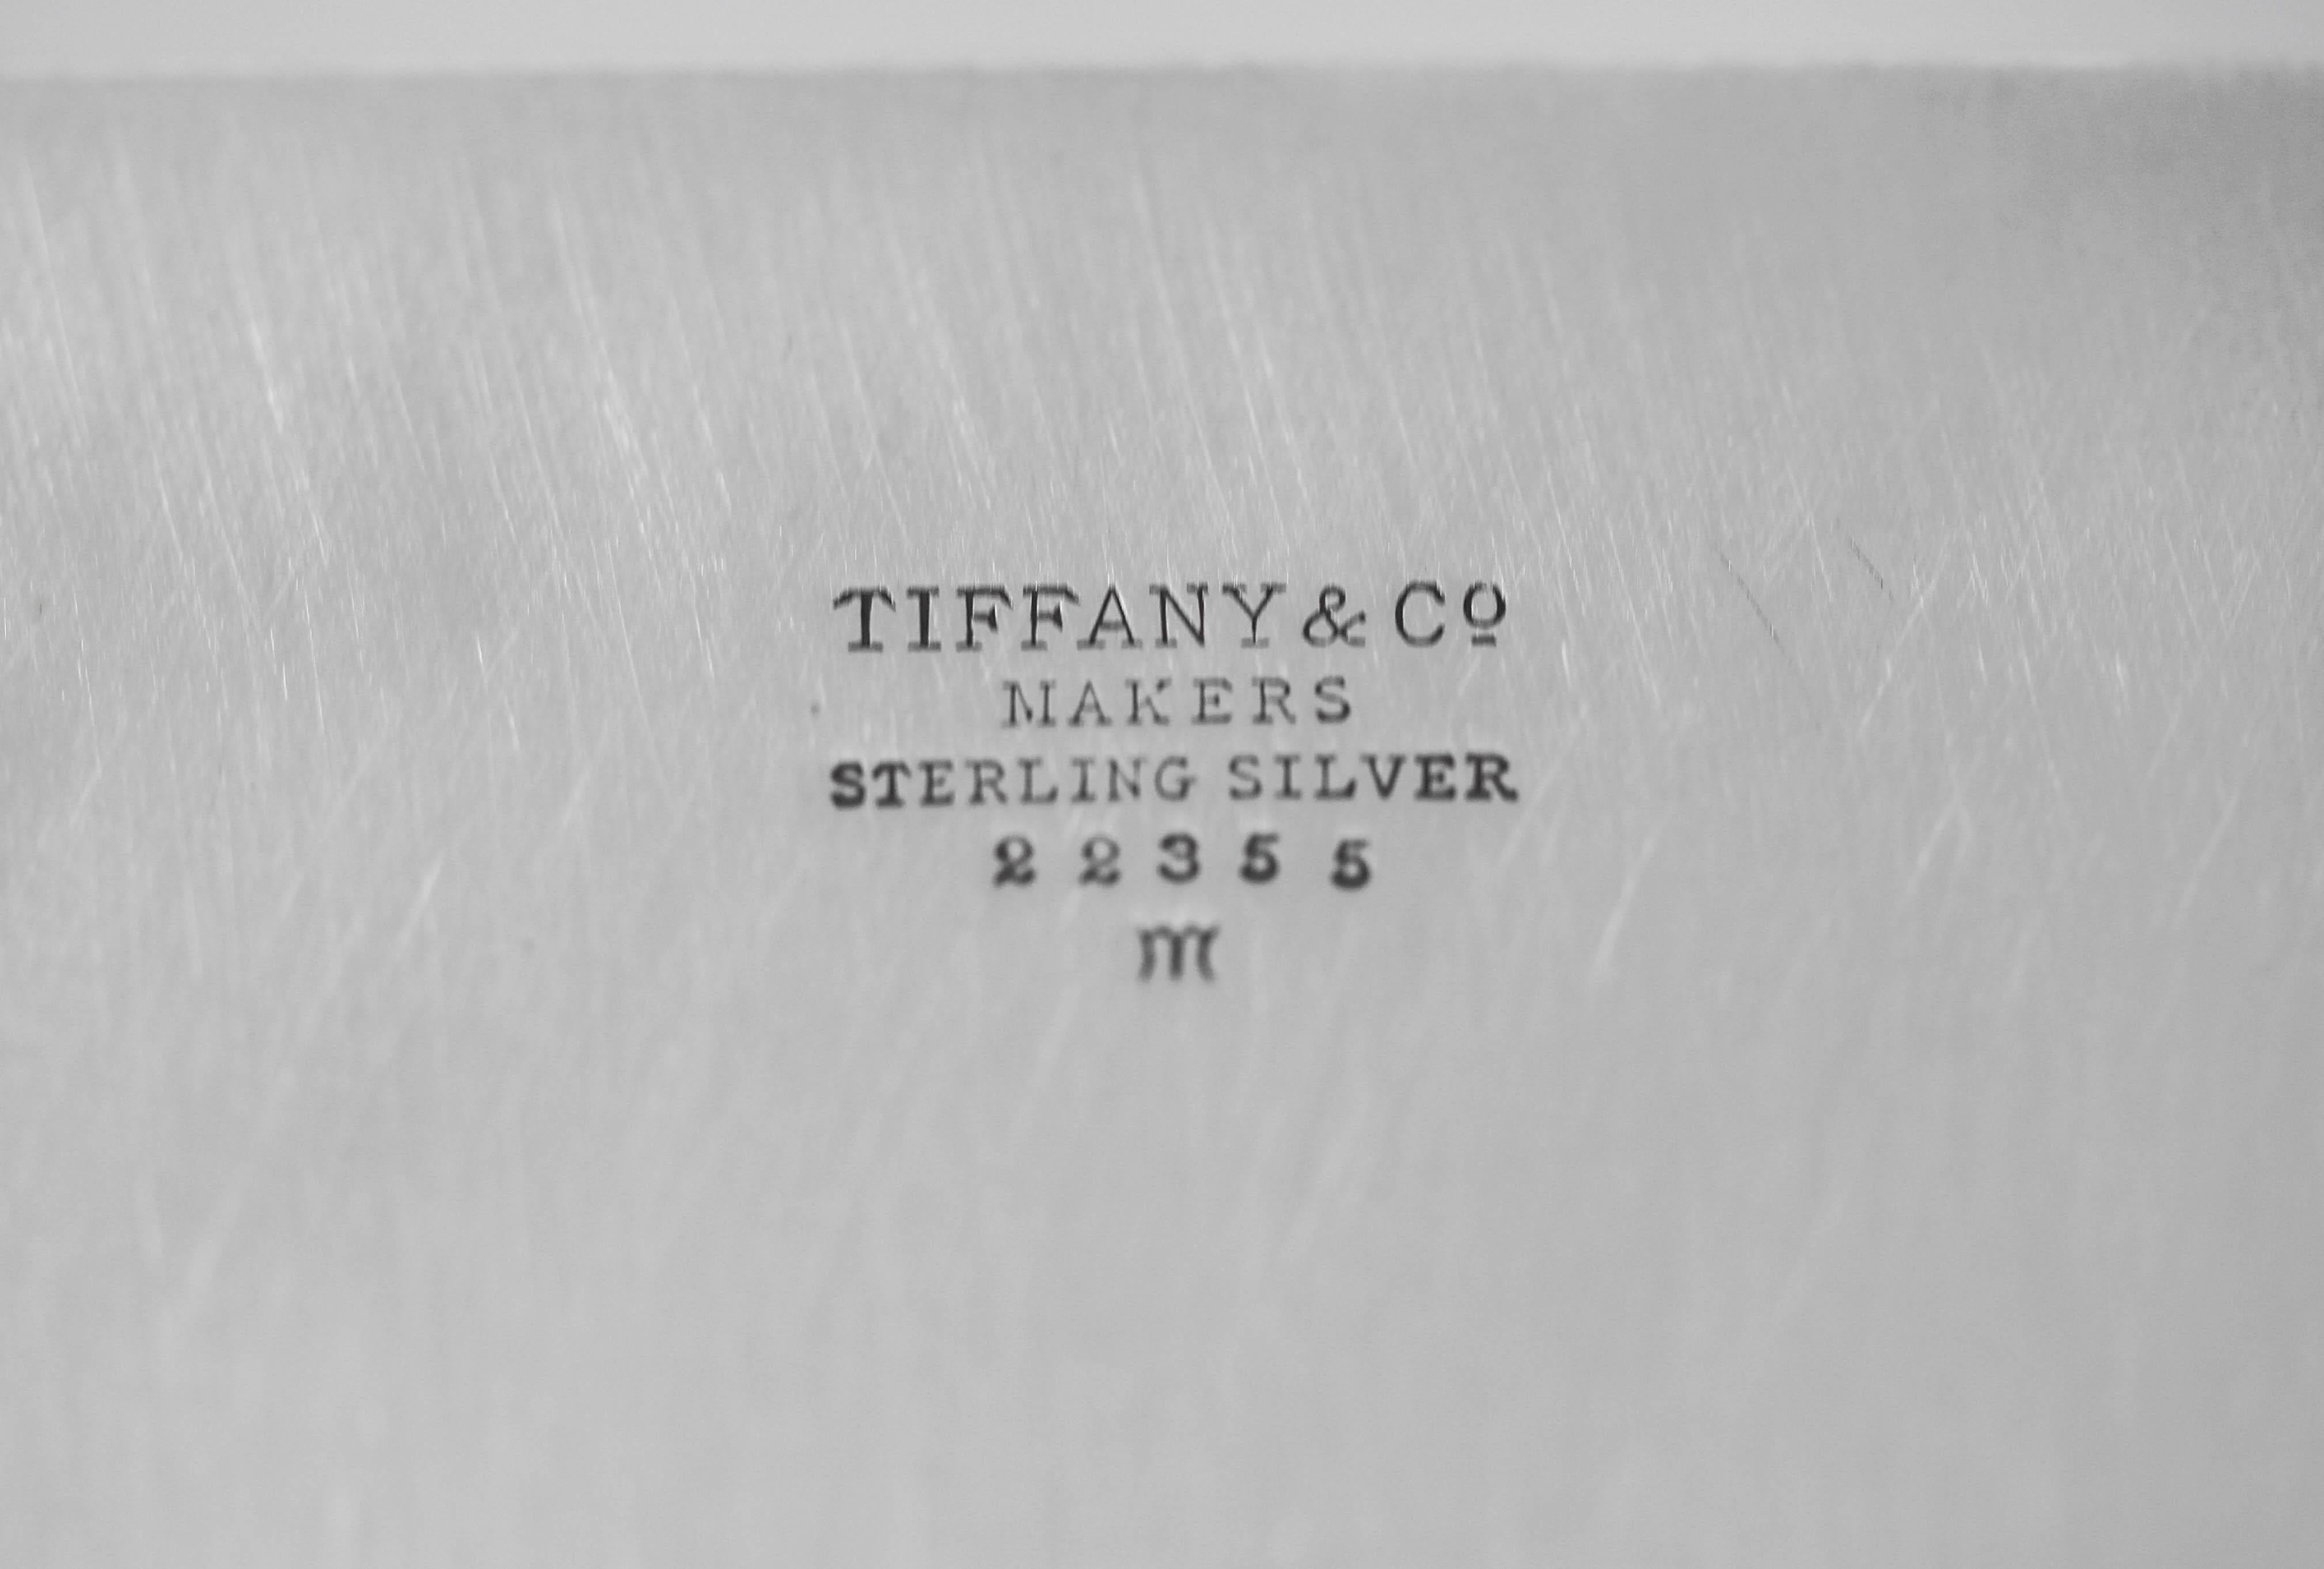 Mid-20th Century Sterling Tiffany Men's Jewelry Box